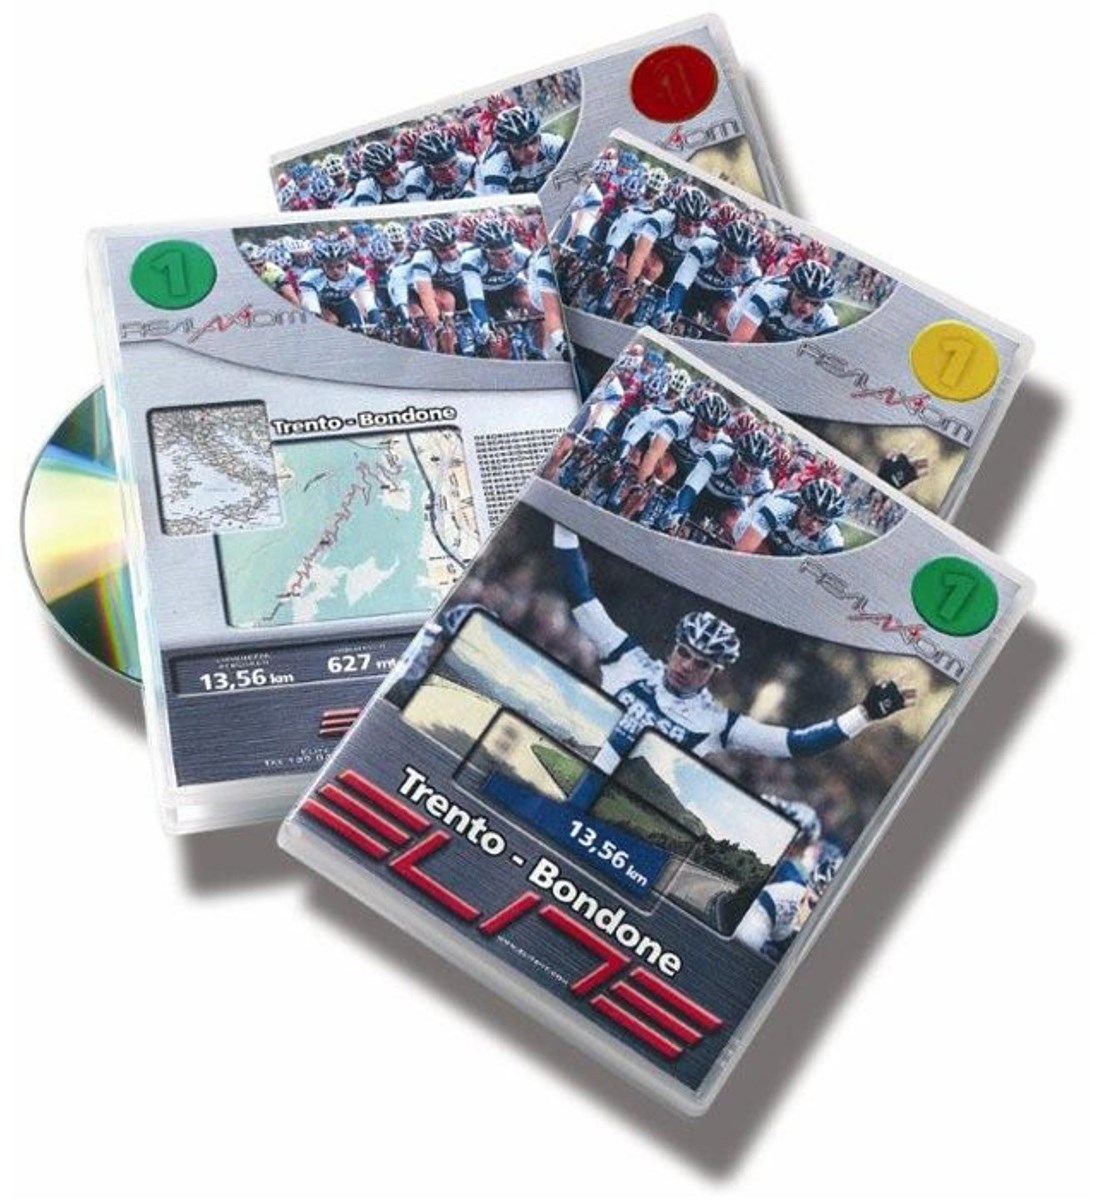 Elite DVD Course For RealAxiom / Power: Caprera - Maddelena product image